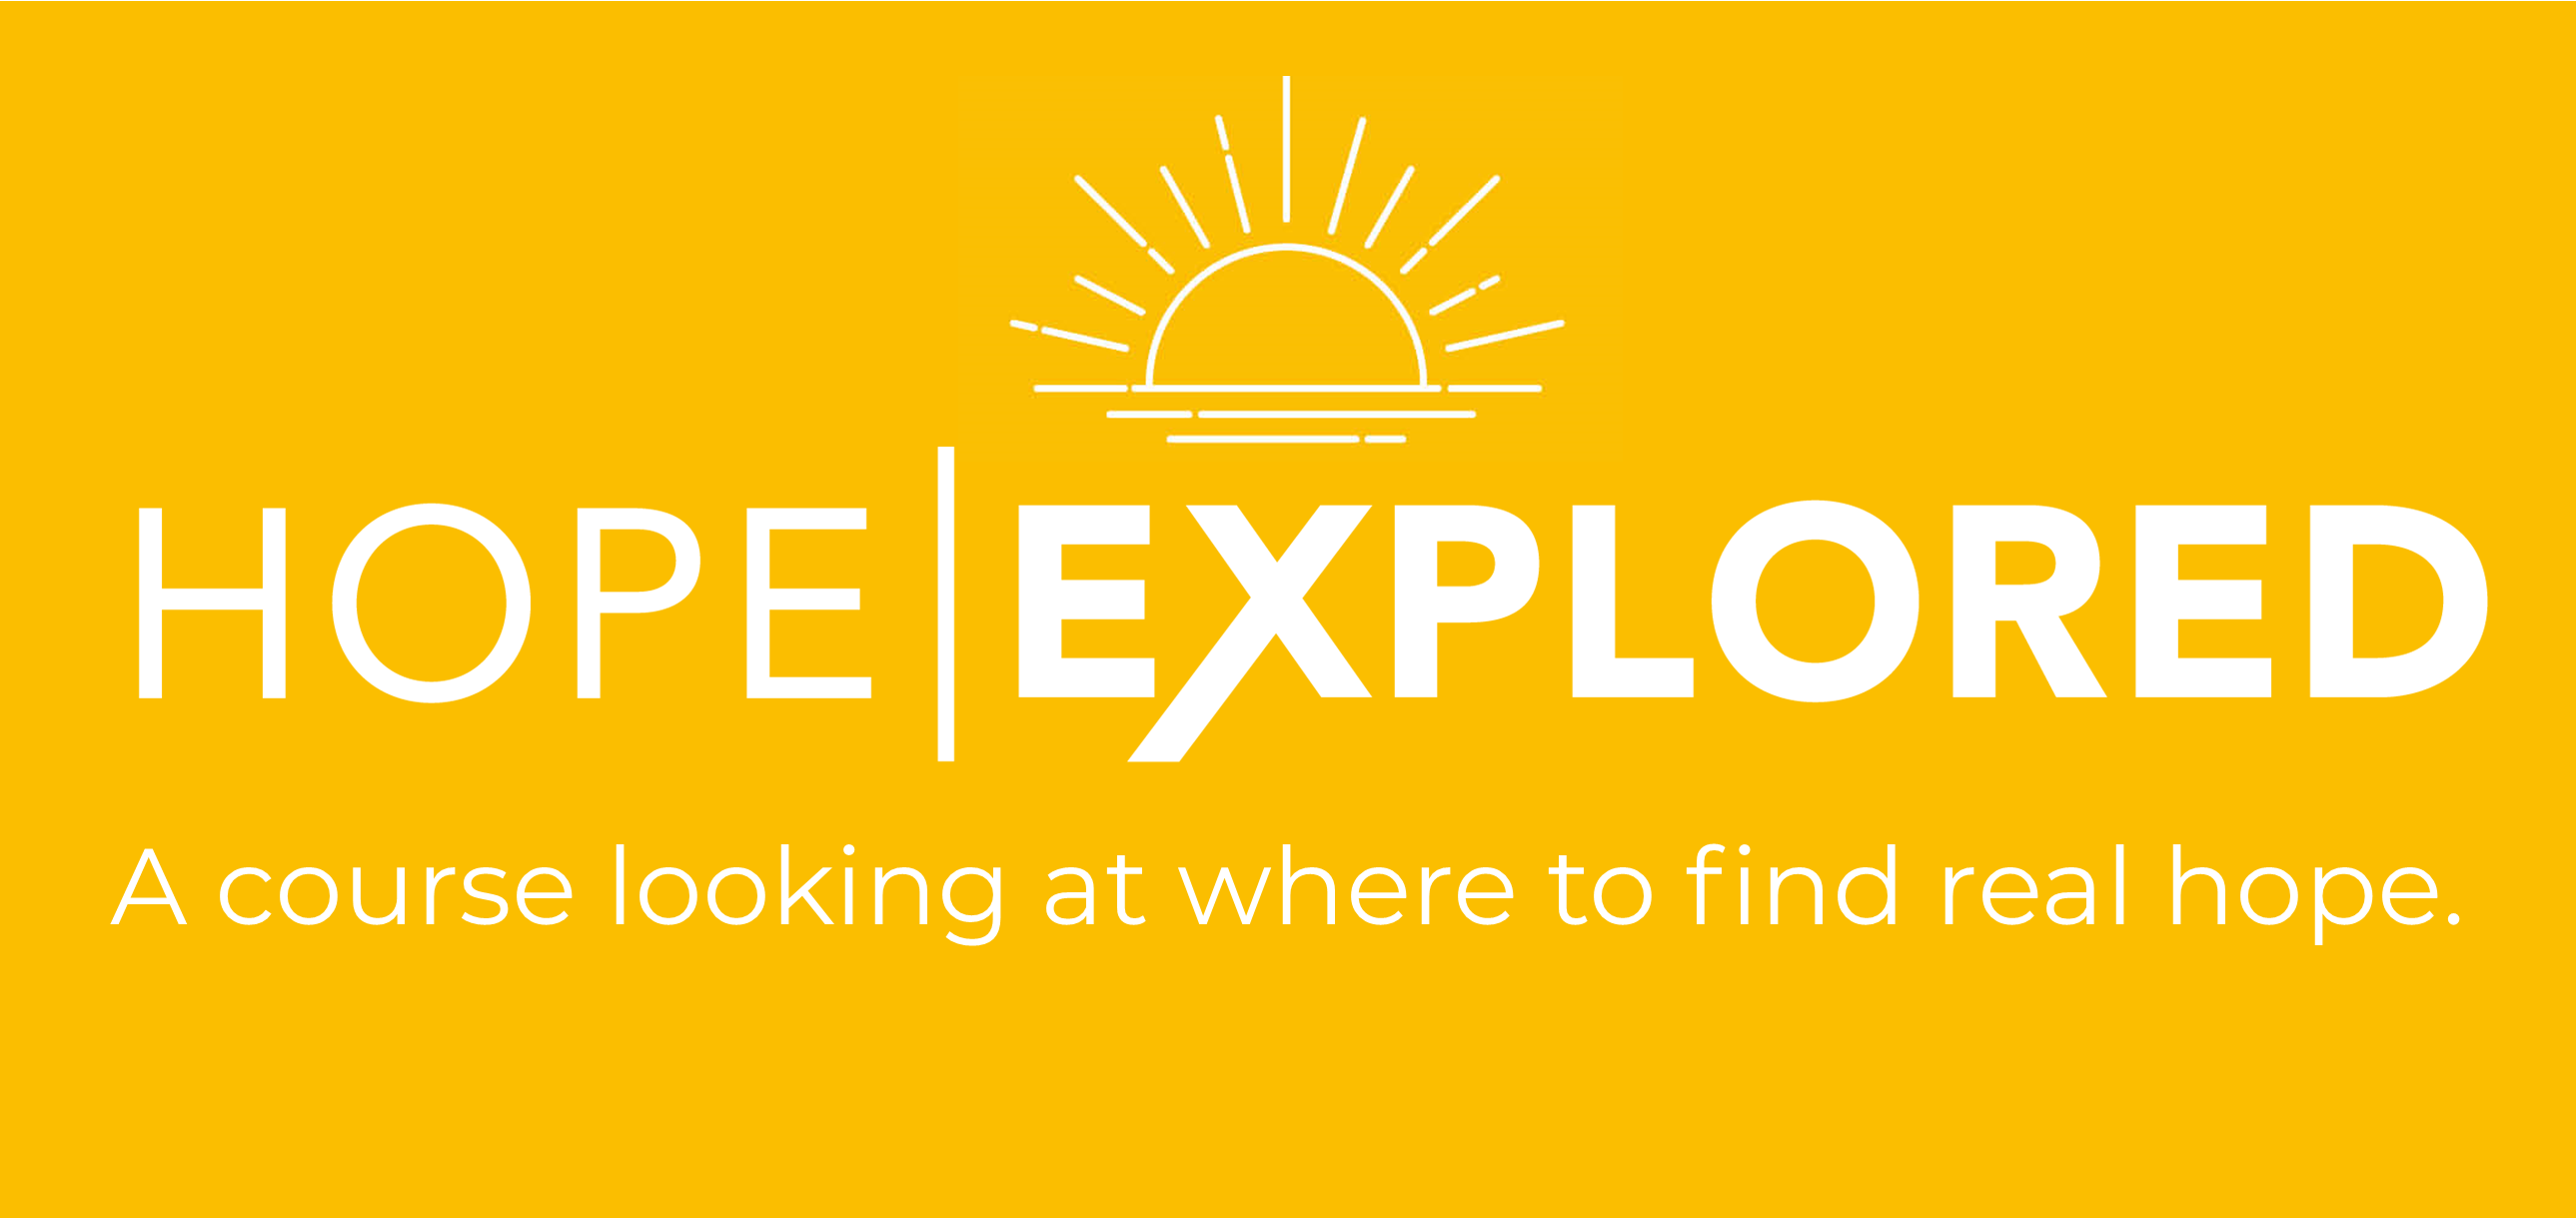 Hope explored website banner 2